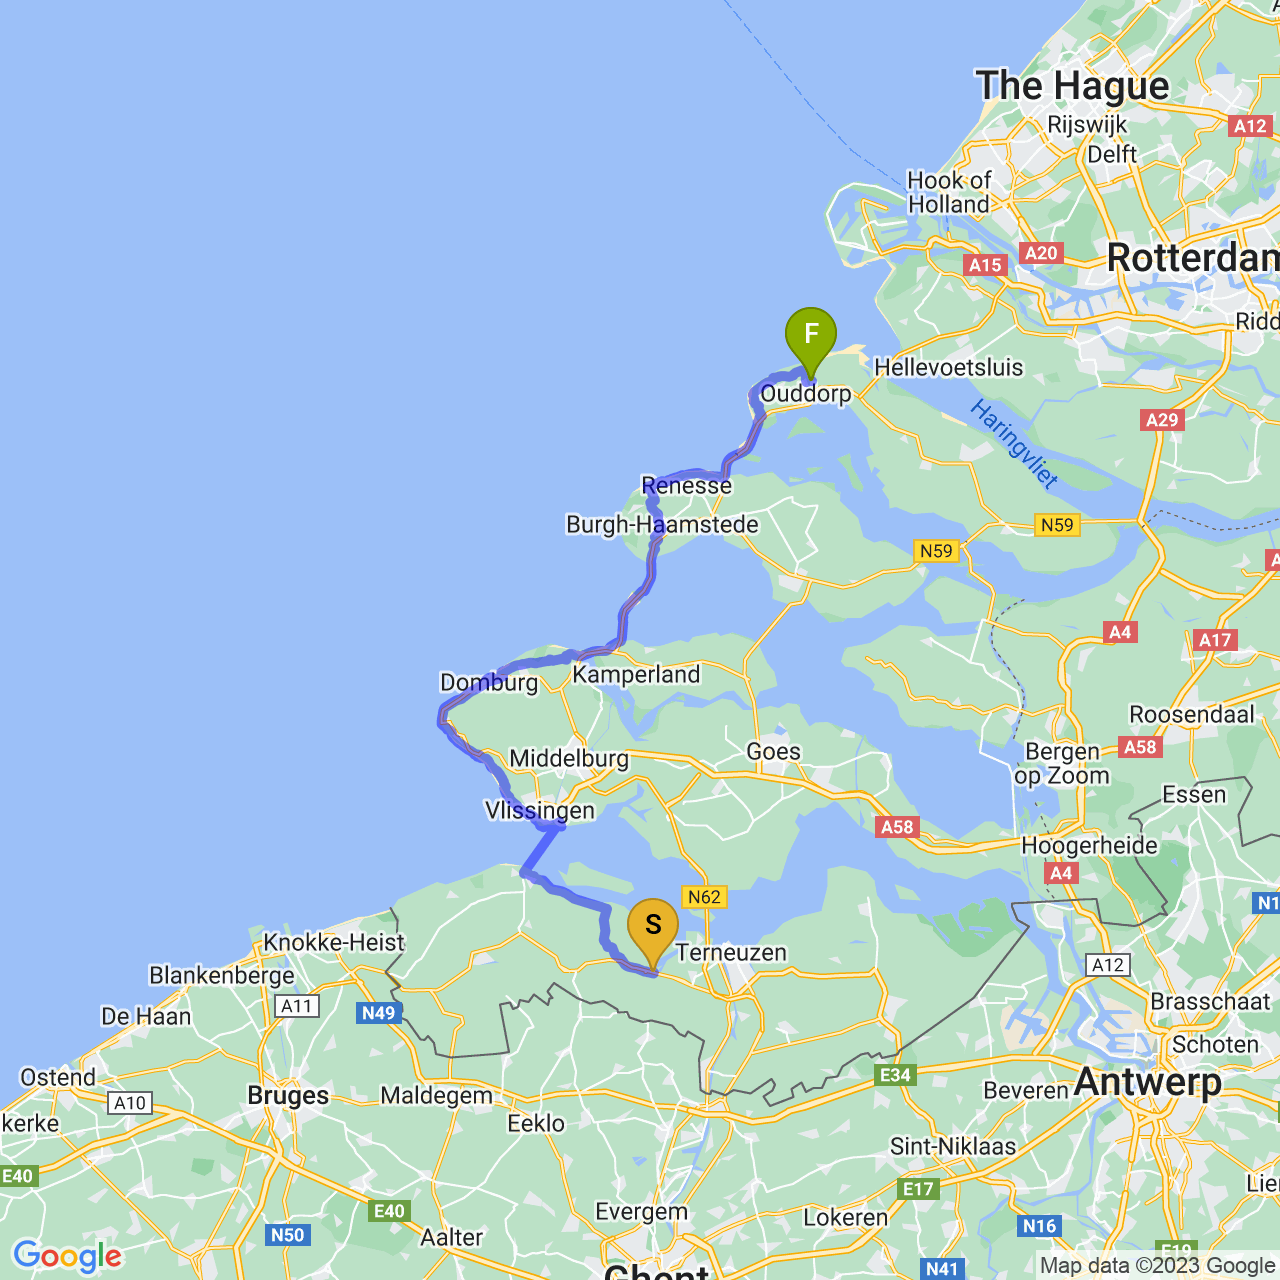 map of Day 4: Zeeland, Netherlands